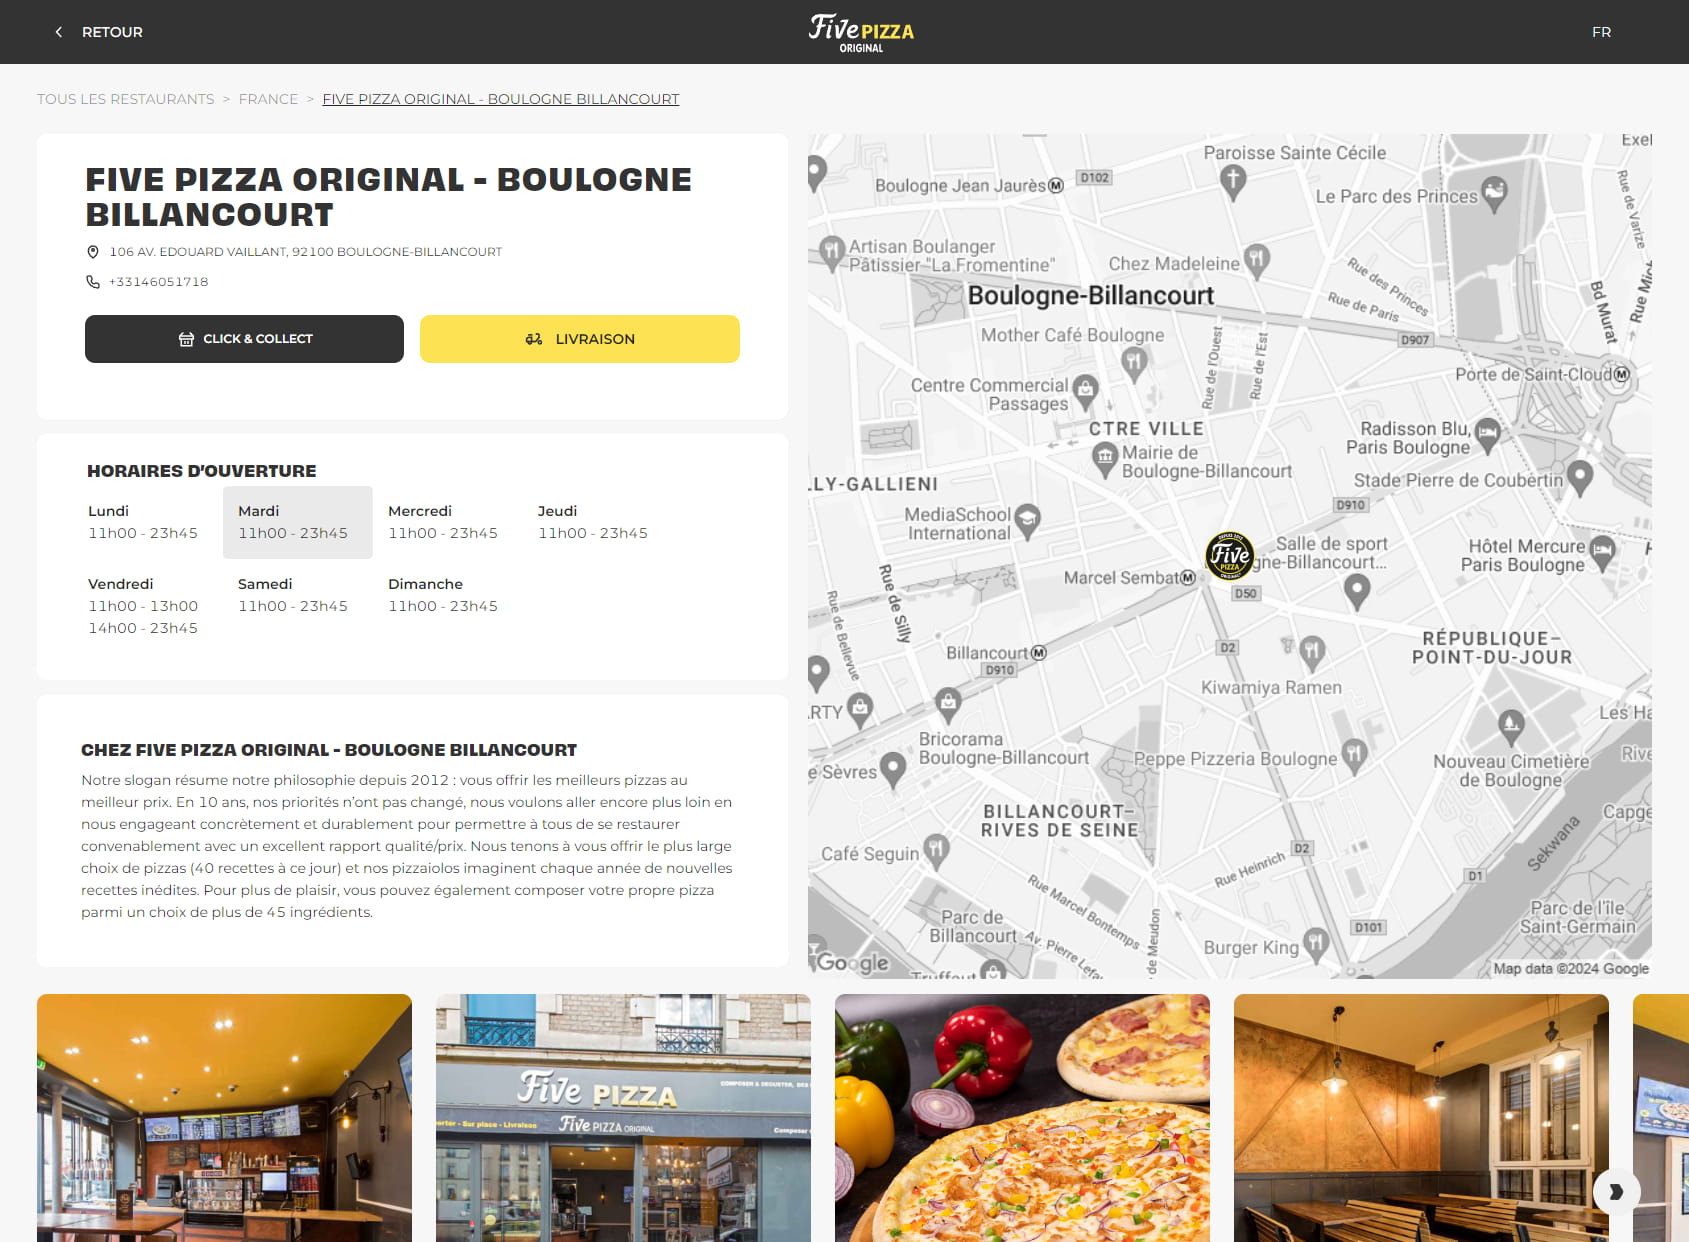 Five Pizza Original - Boulogne - Billancourt